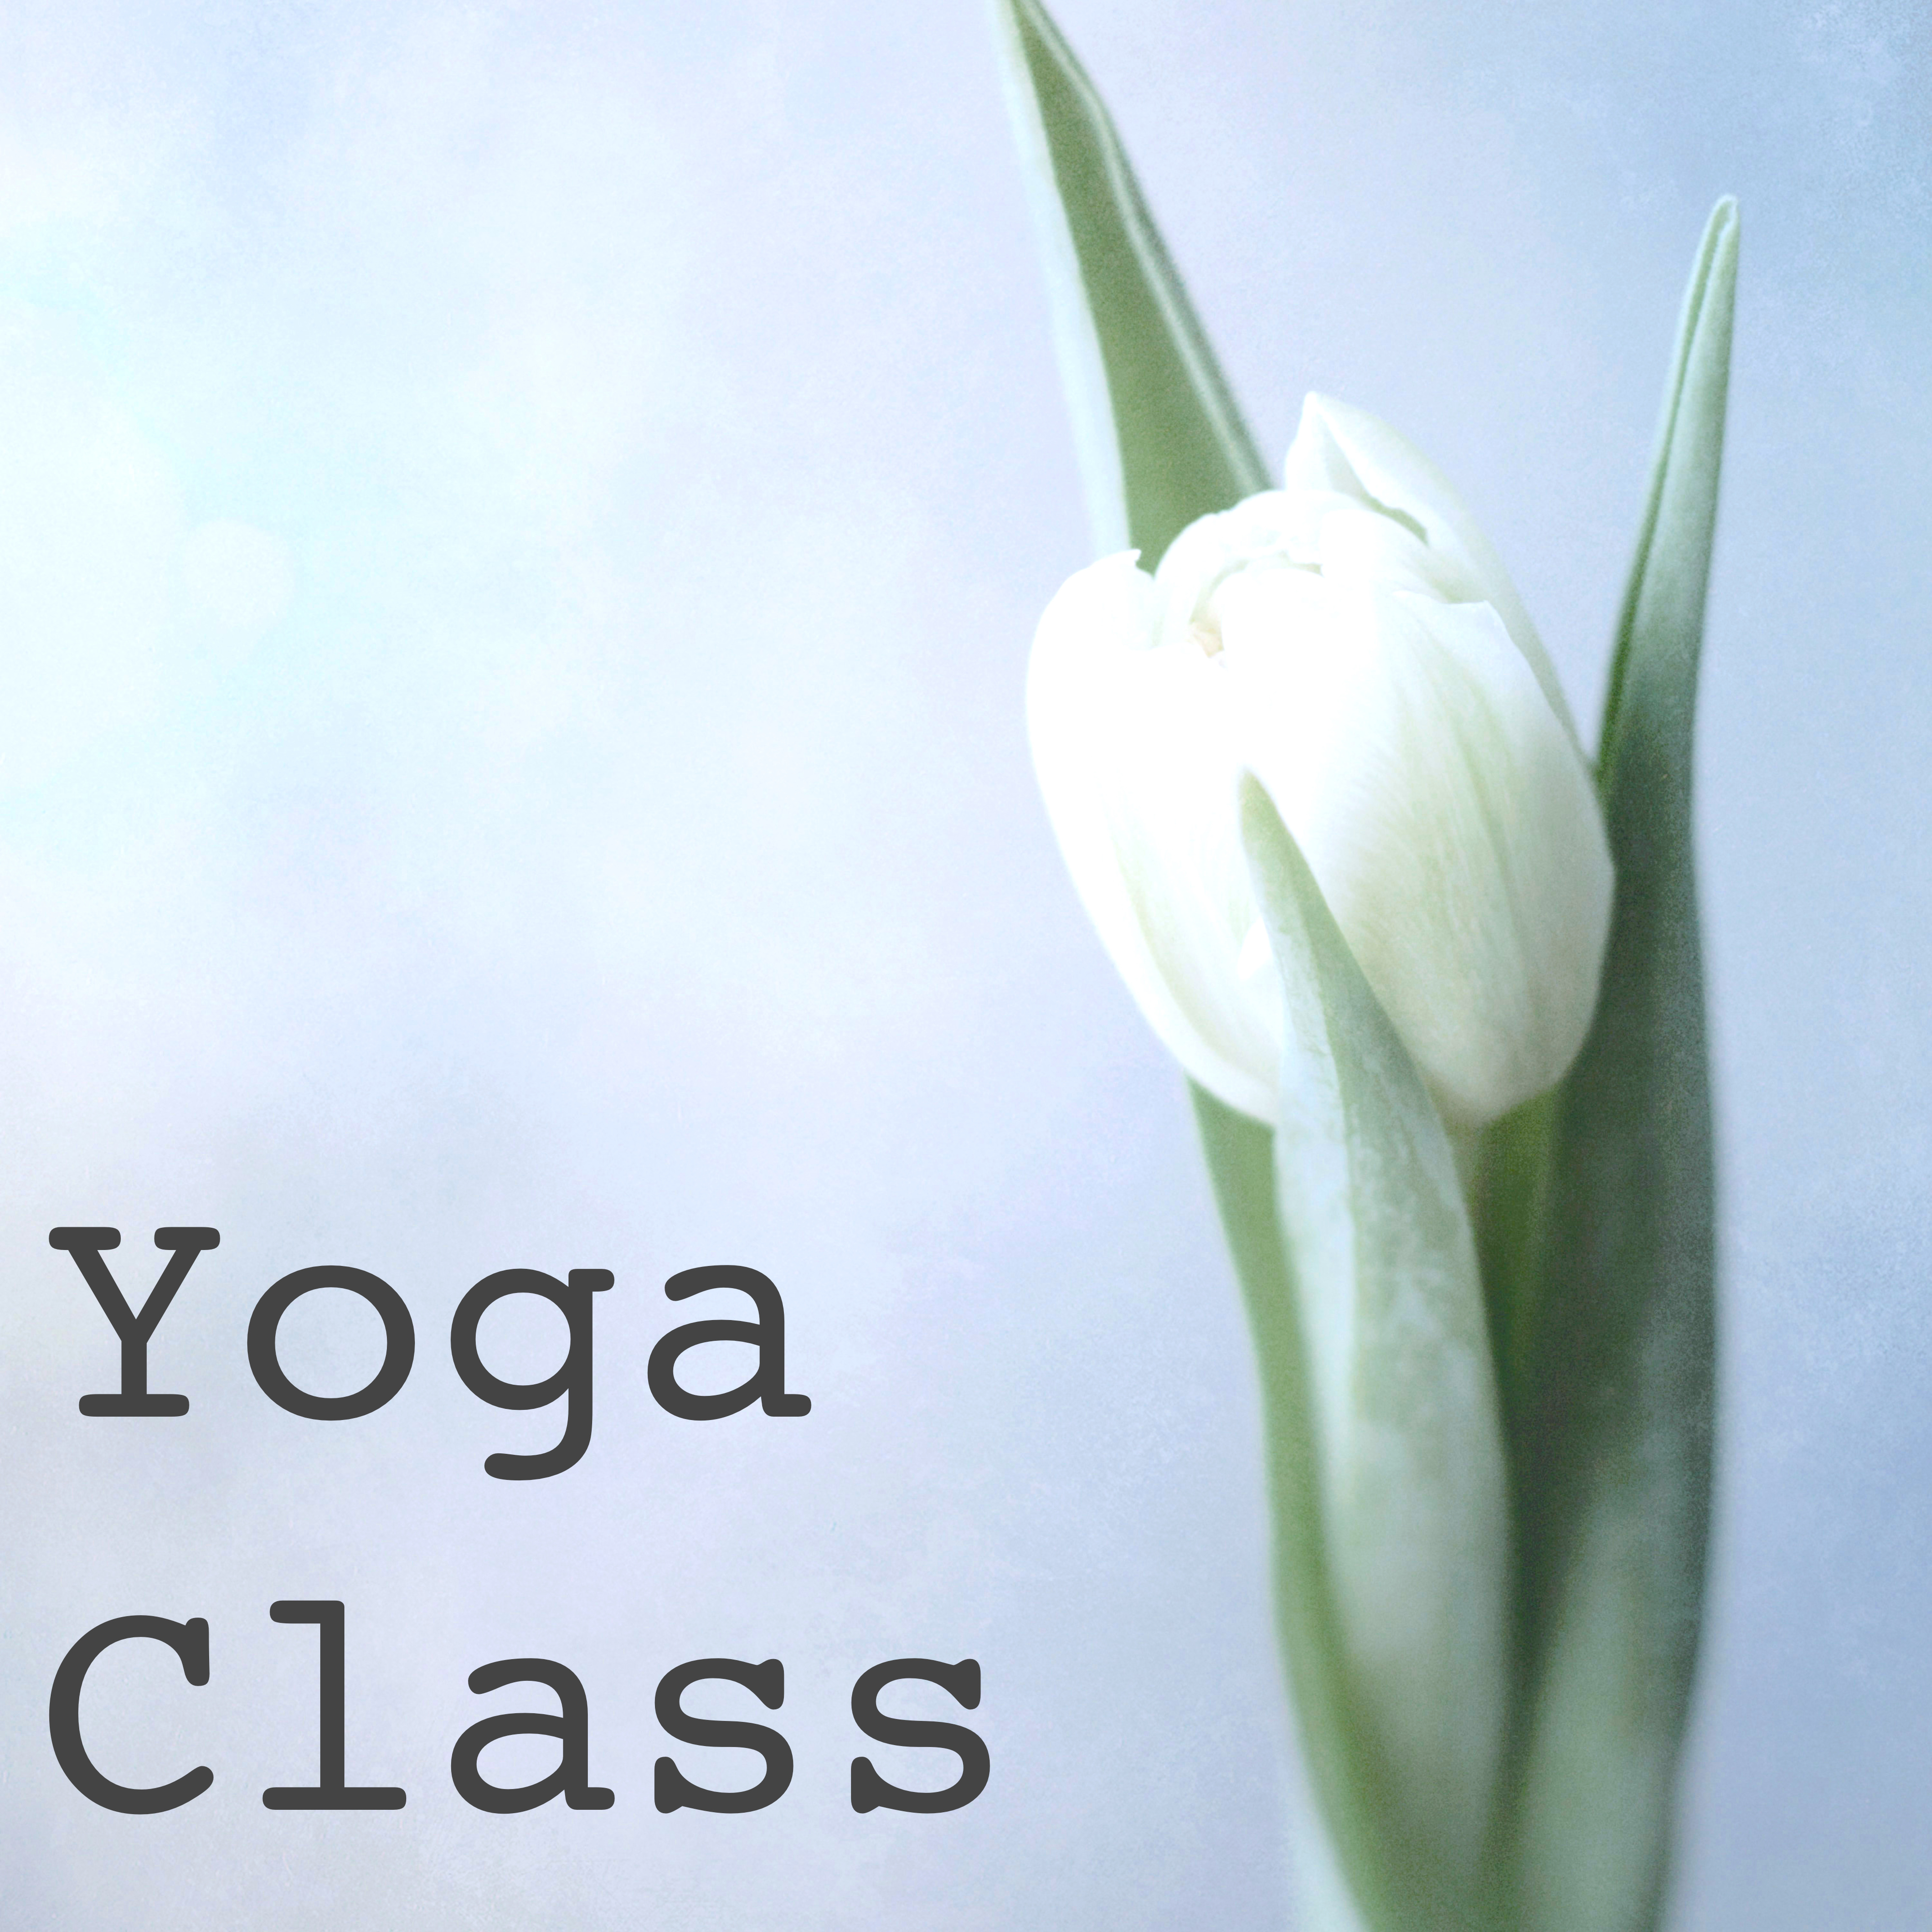 Yoga Class – 25 Songs: Deep Meditation Music for Yoga Morning Salutation, Pranayama, Hatha Yoga and Reiki, Best Soothing Piano Songs for Mindfulness